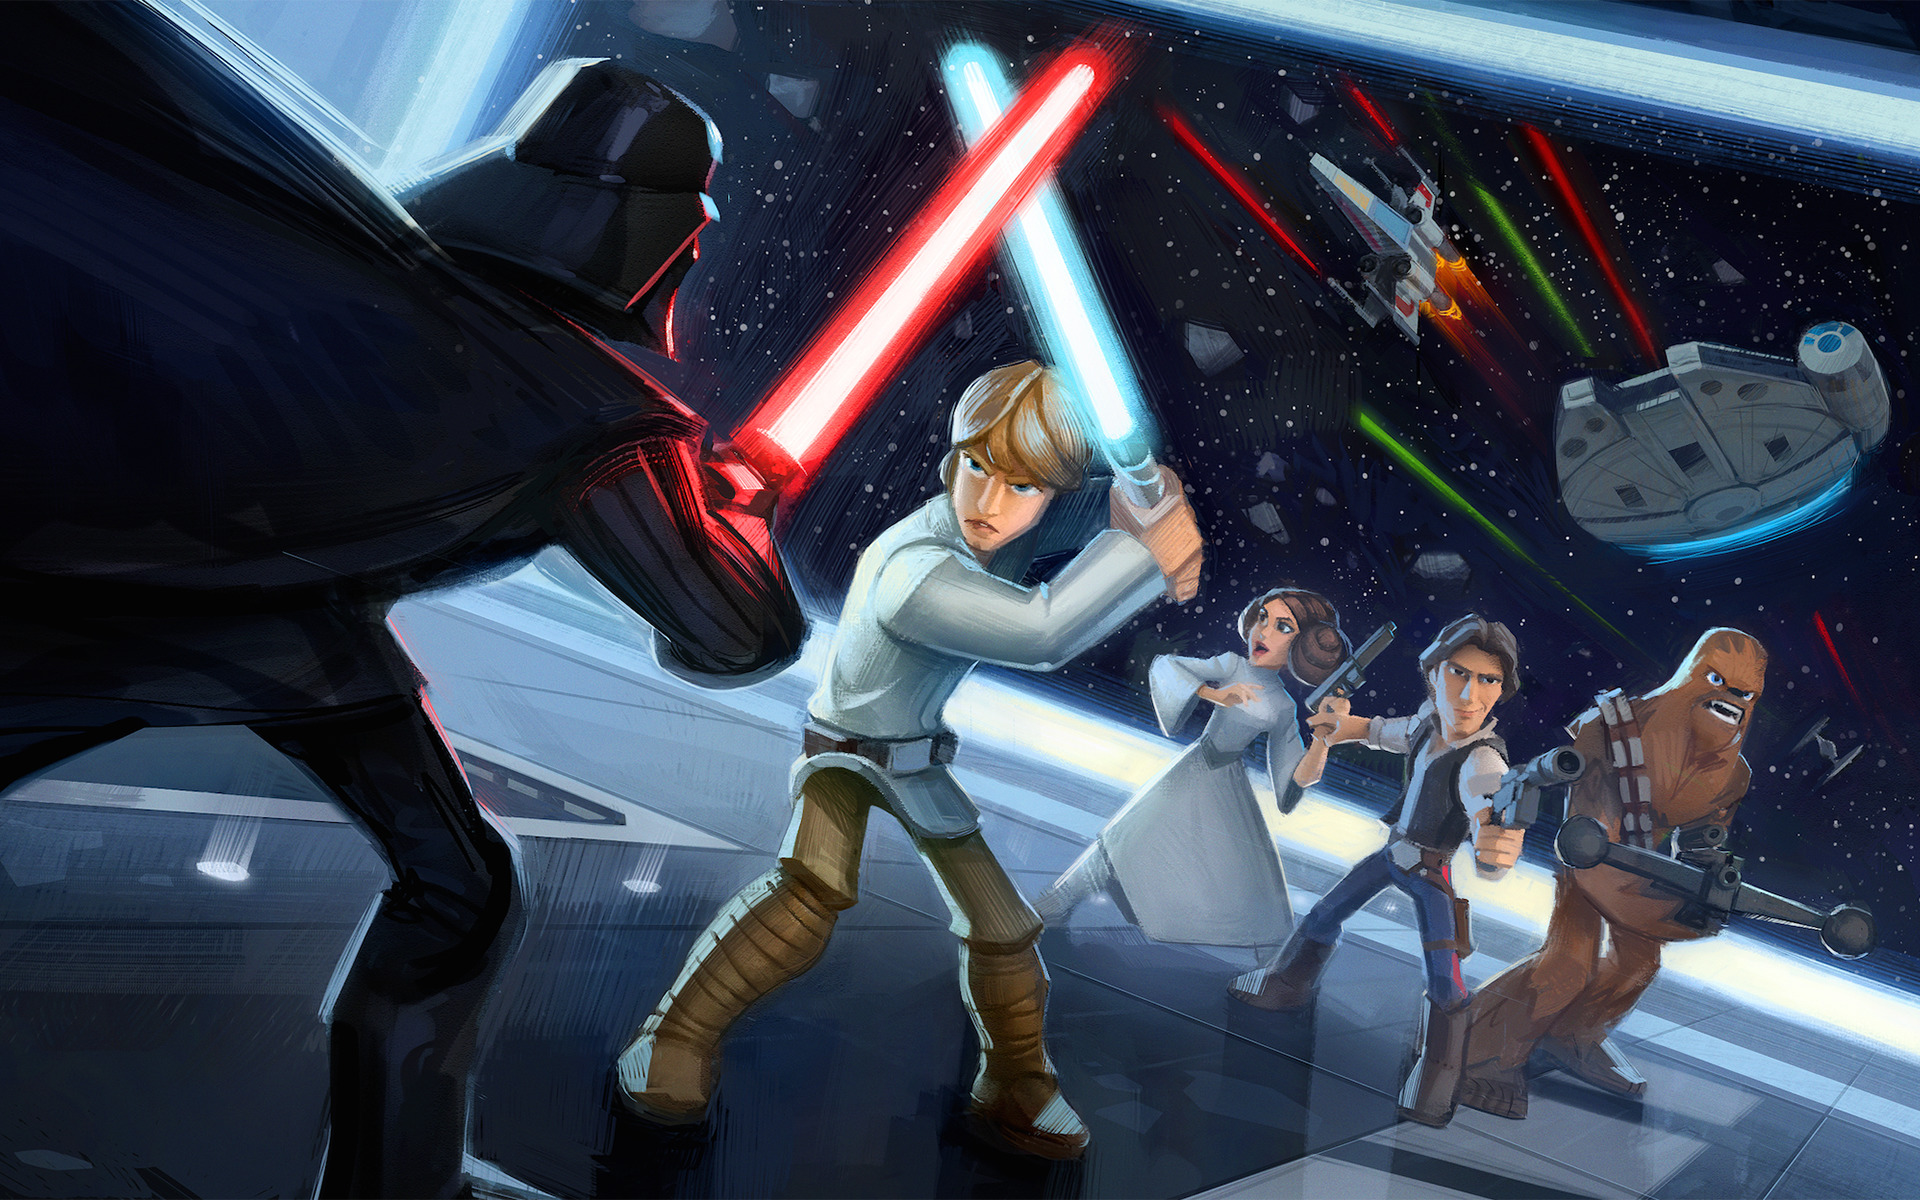 Star Wars, Han Solo, Luke Skywalker, Darth Vader, Princess Leia